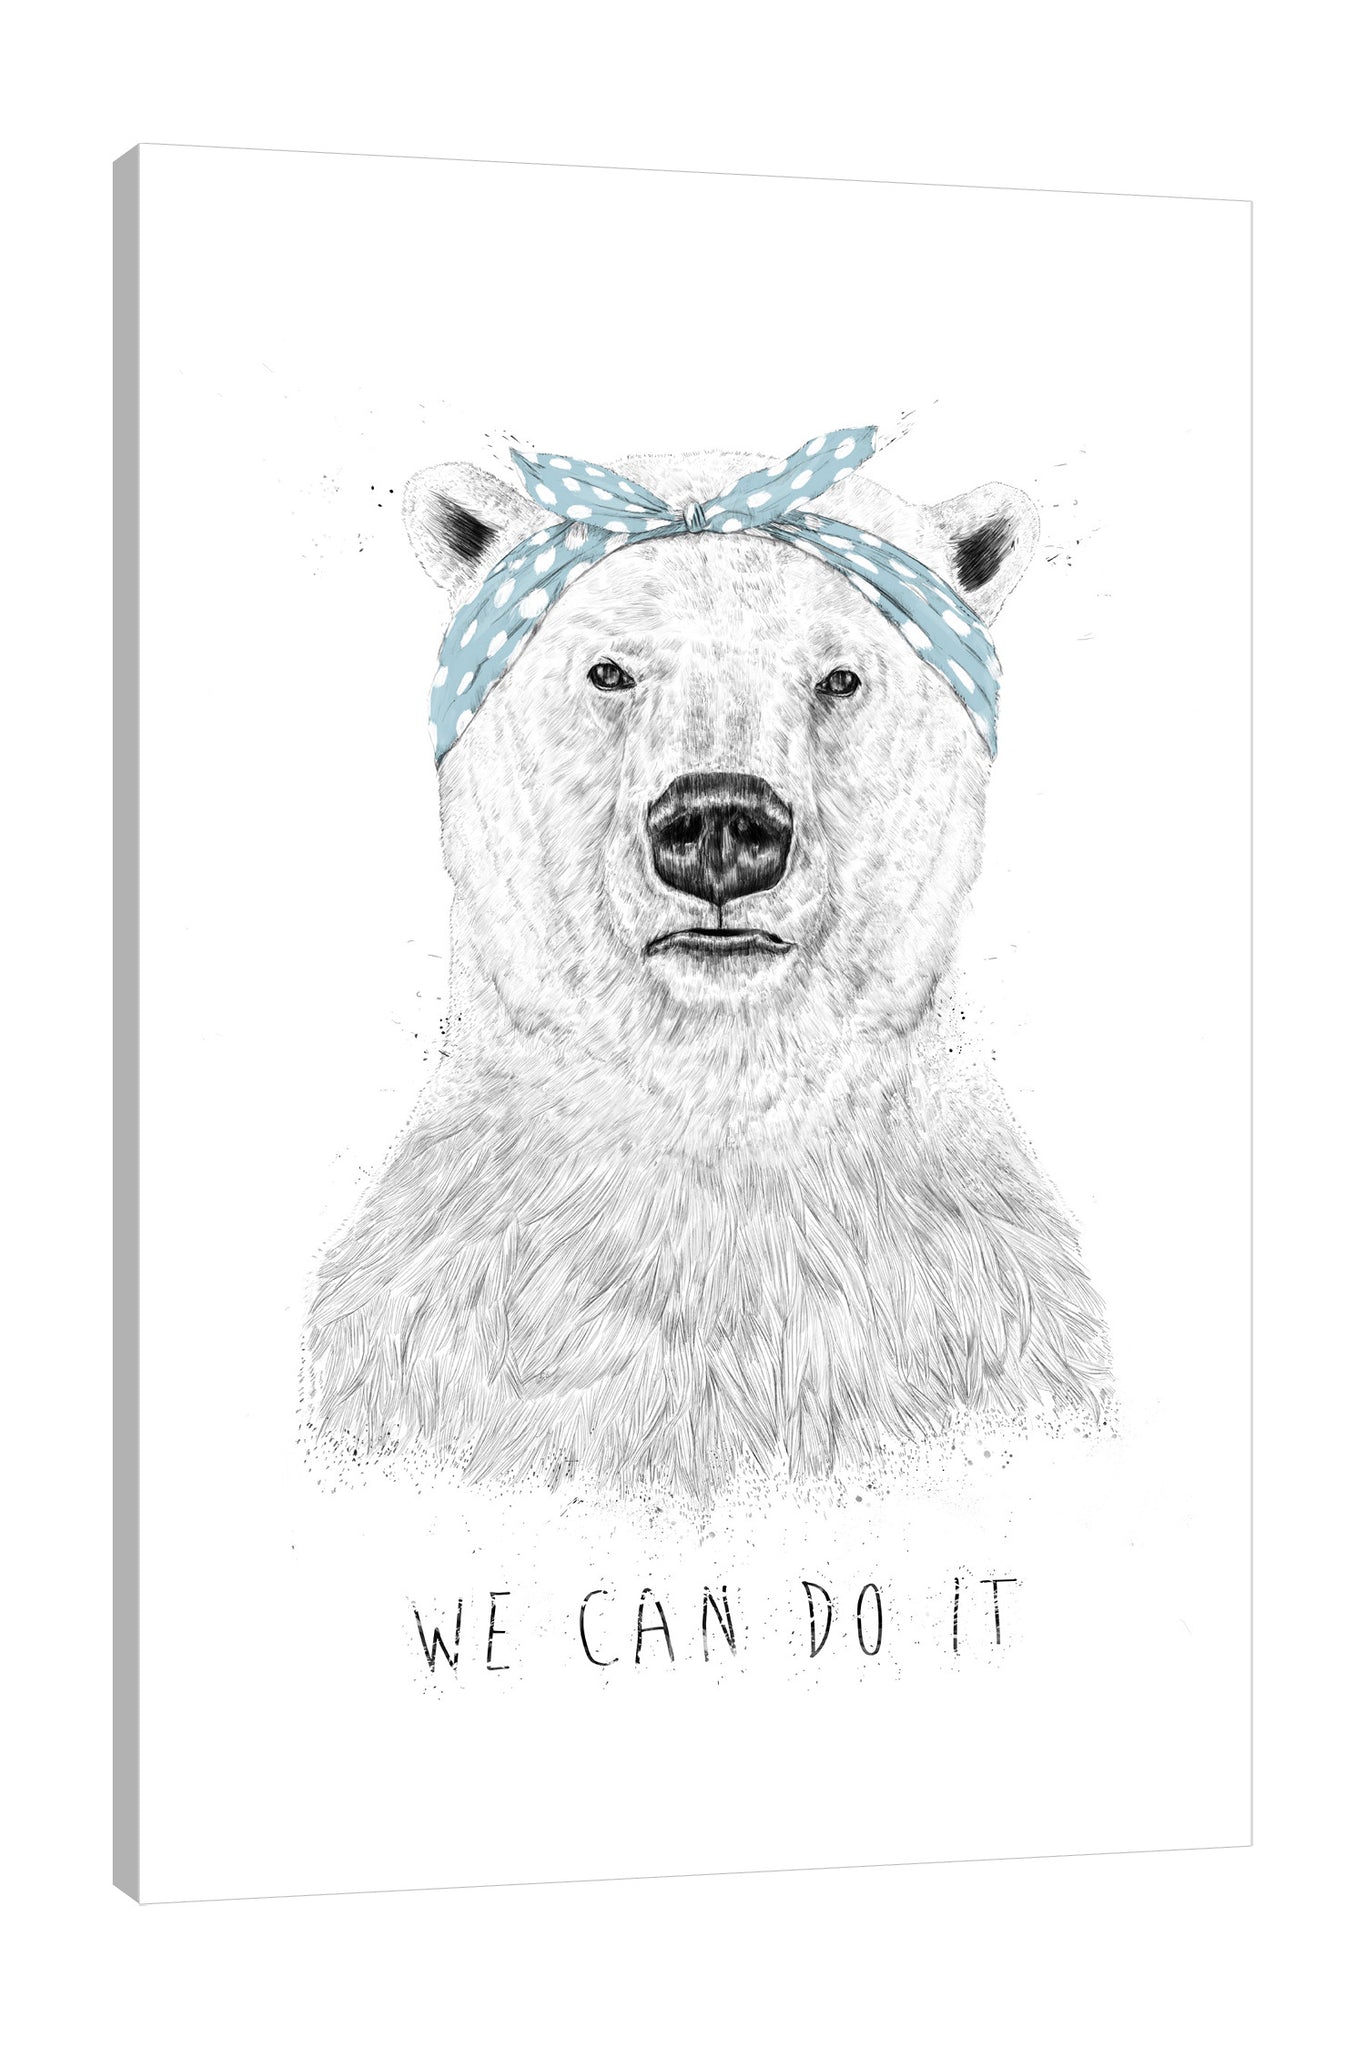 Balazs-Solti,Modern & Contemporary,Animals,Inspirational Quotes & Sayings,animals,animal.bear,bears,polka dots,polka dot,we can do it,words and phrases,inspirational,blue,headband,White,Gray